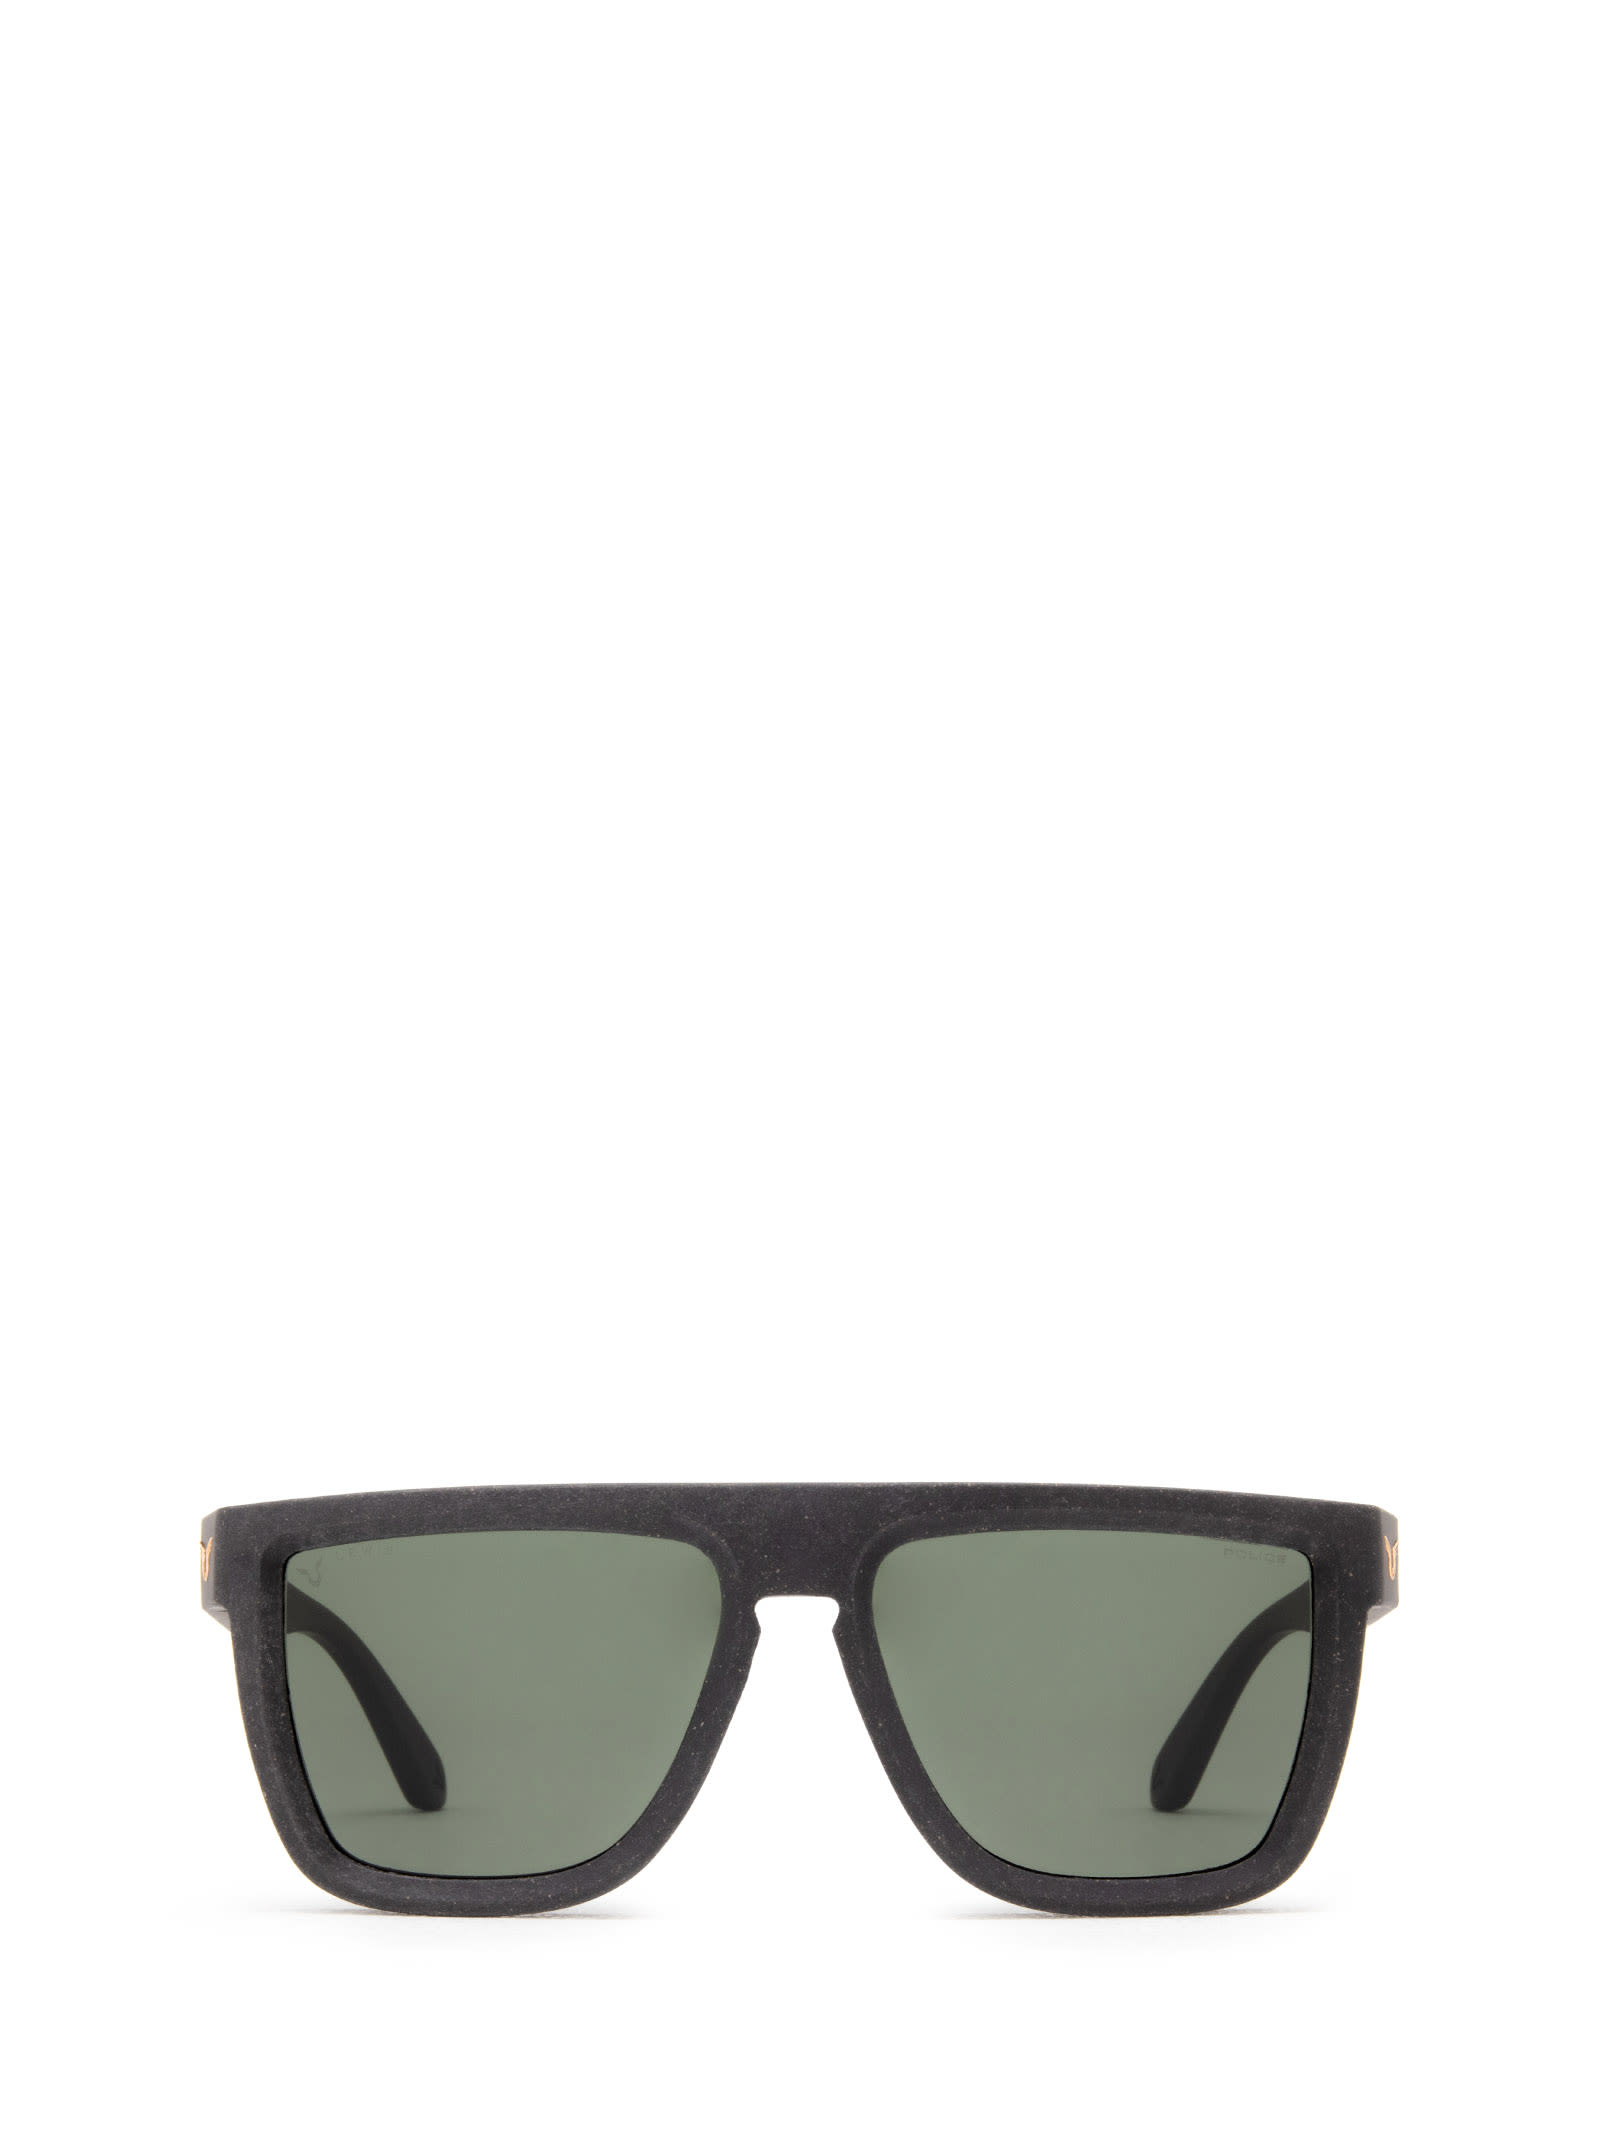 Sple39 Black Sunglasses